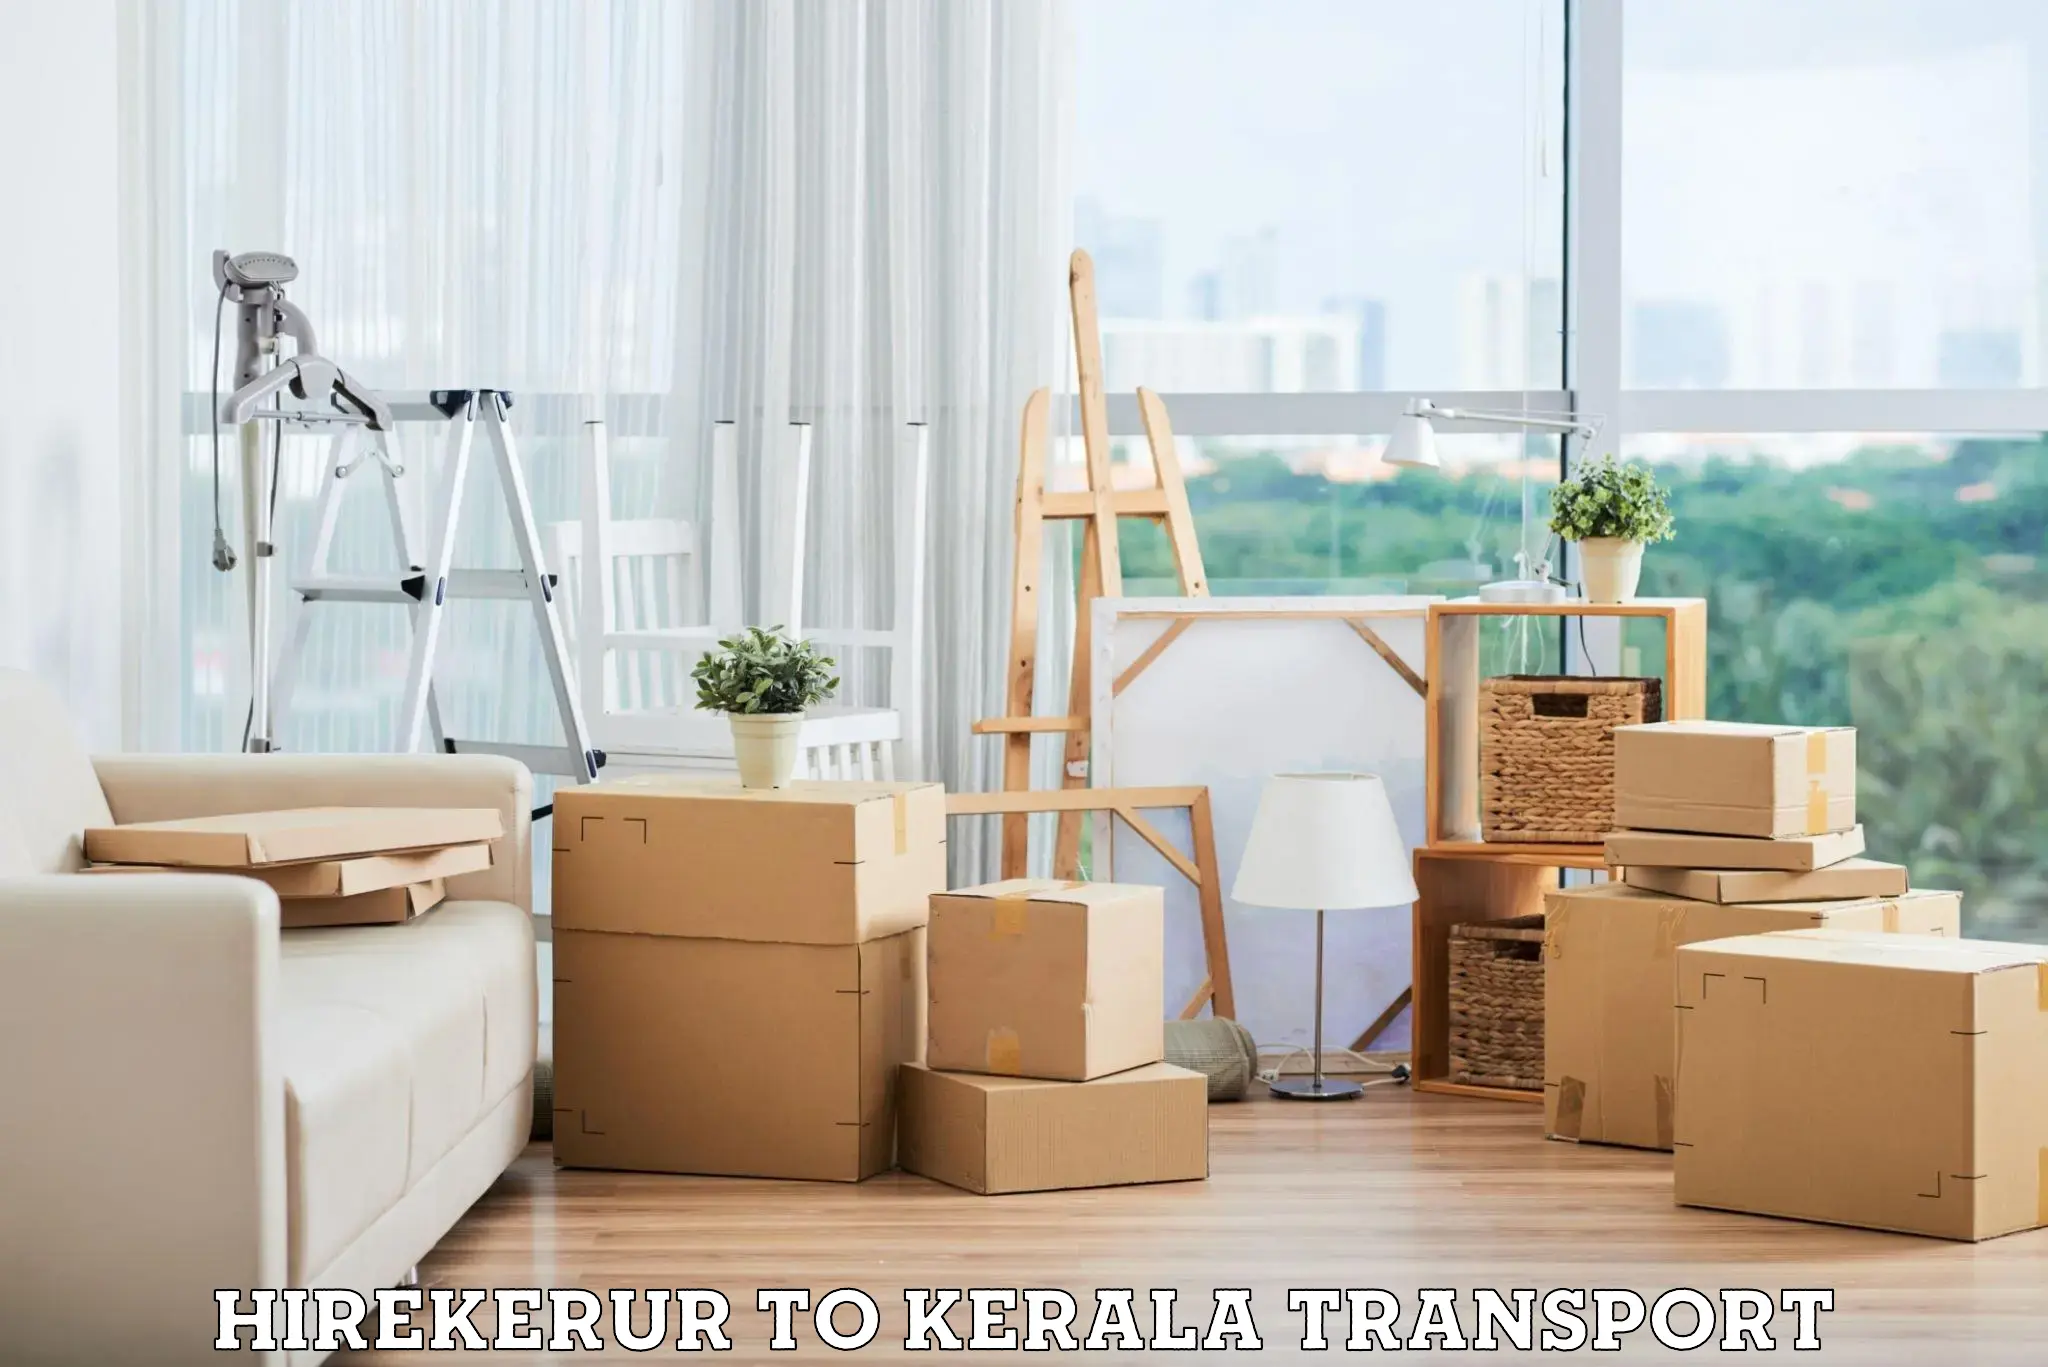 Daily transport service Hirekerur to Kerala